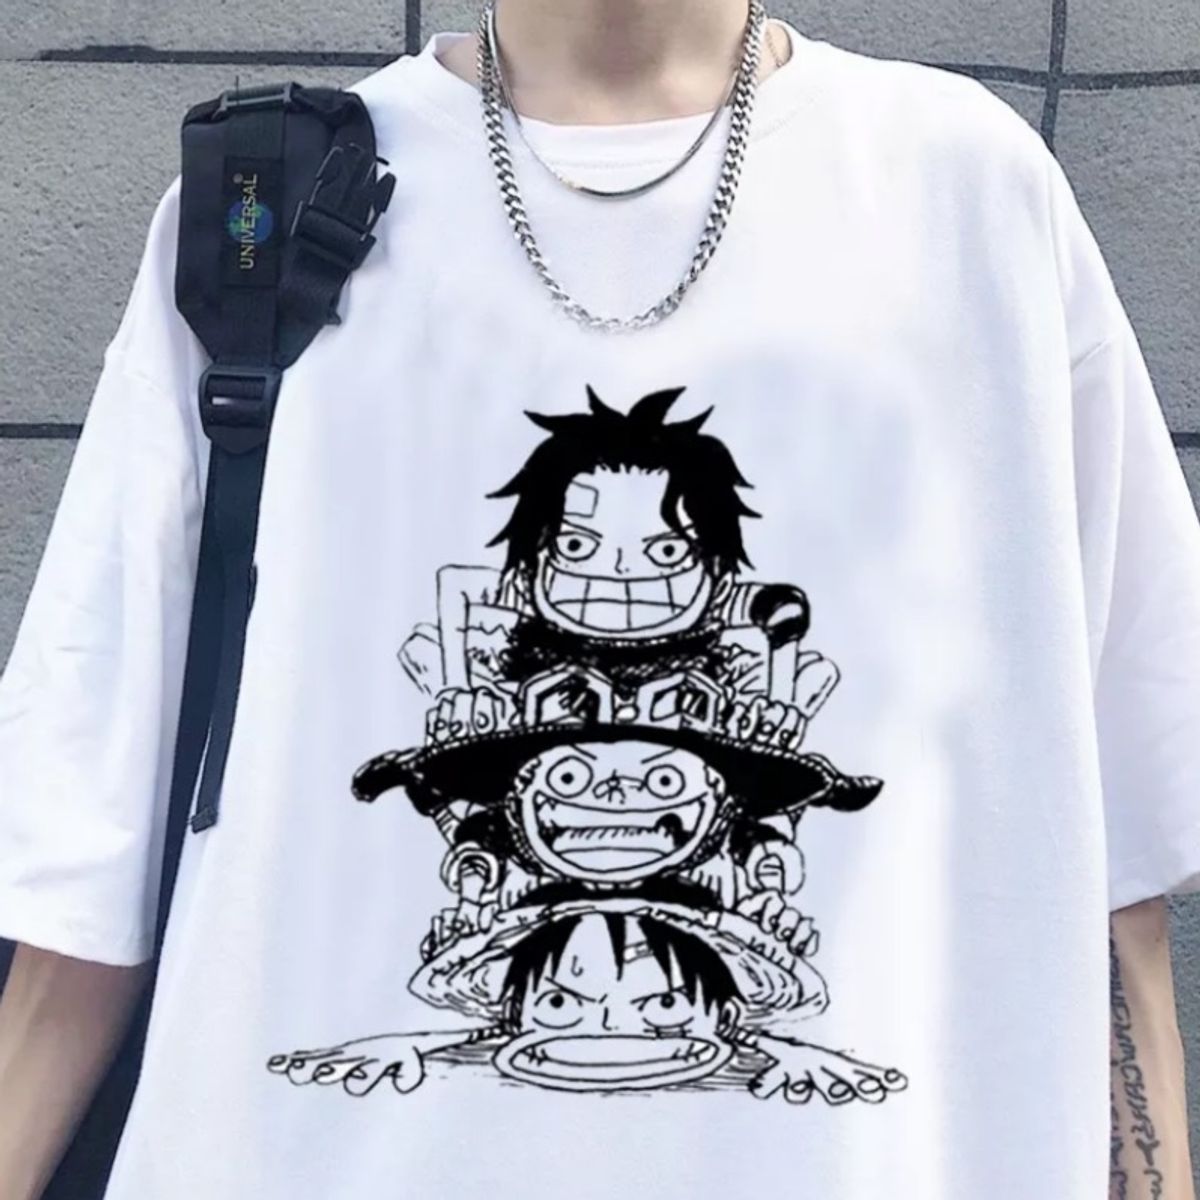 Camiseta Camisa Masculina One Piece Luffy Infantil Animes